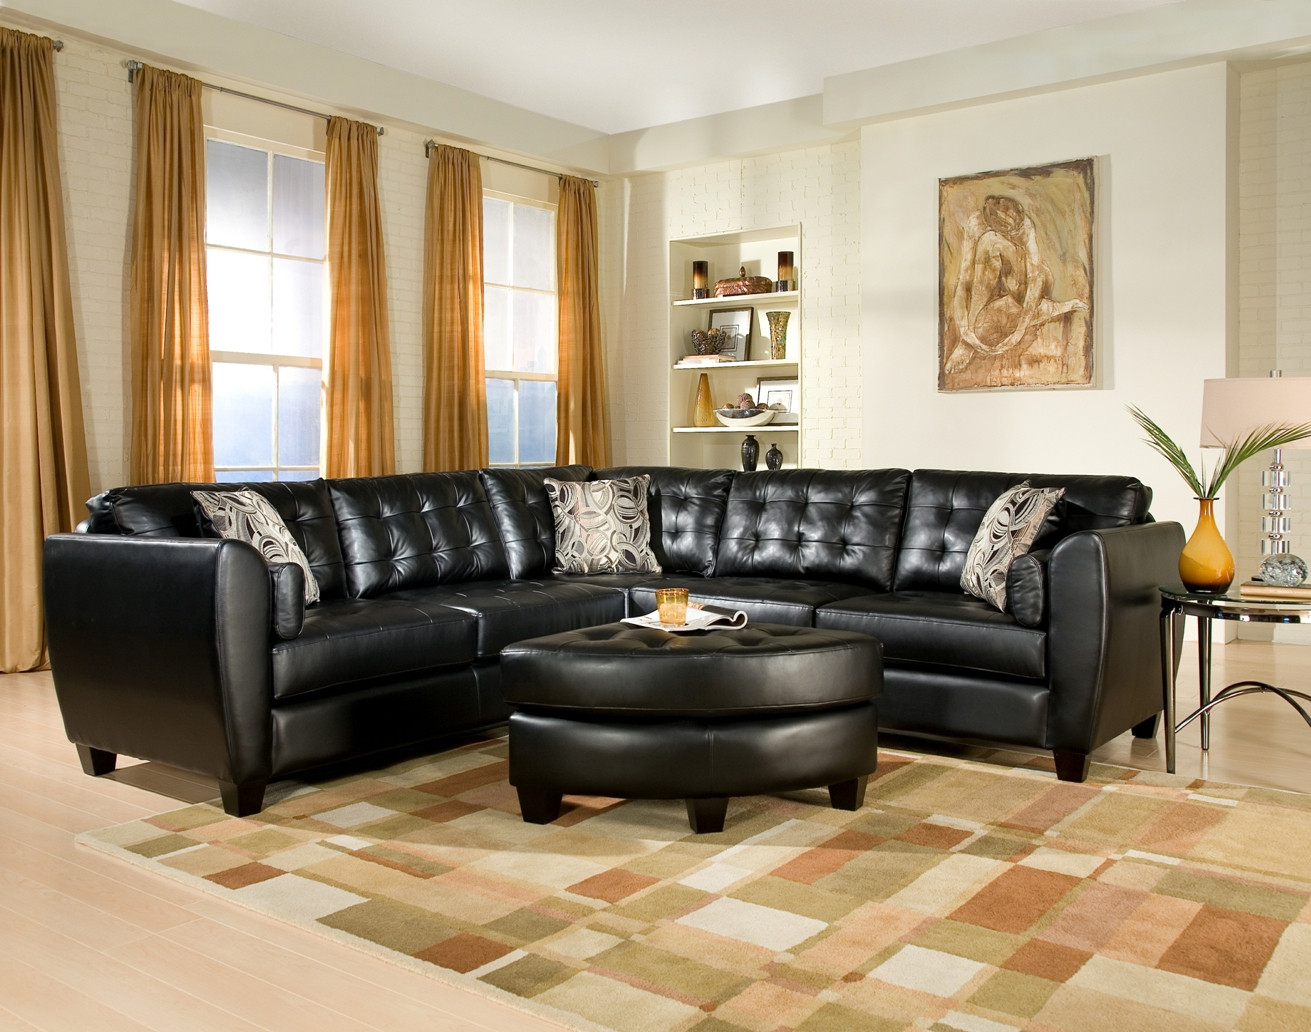 Sofa For Small Living Room
 Living Room Ideas with Sectionals Sofa for Small Living